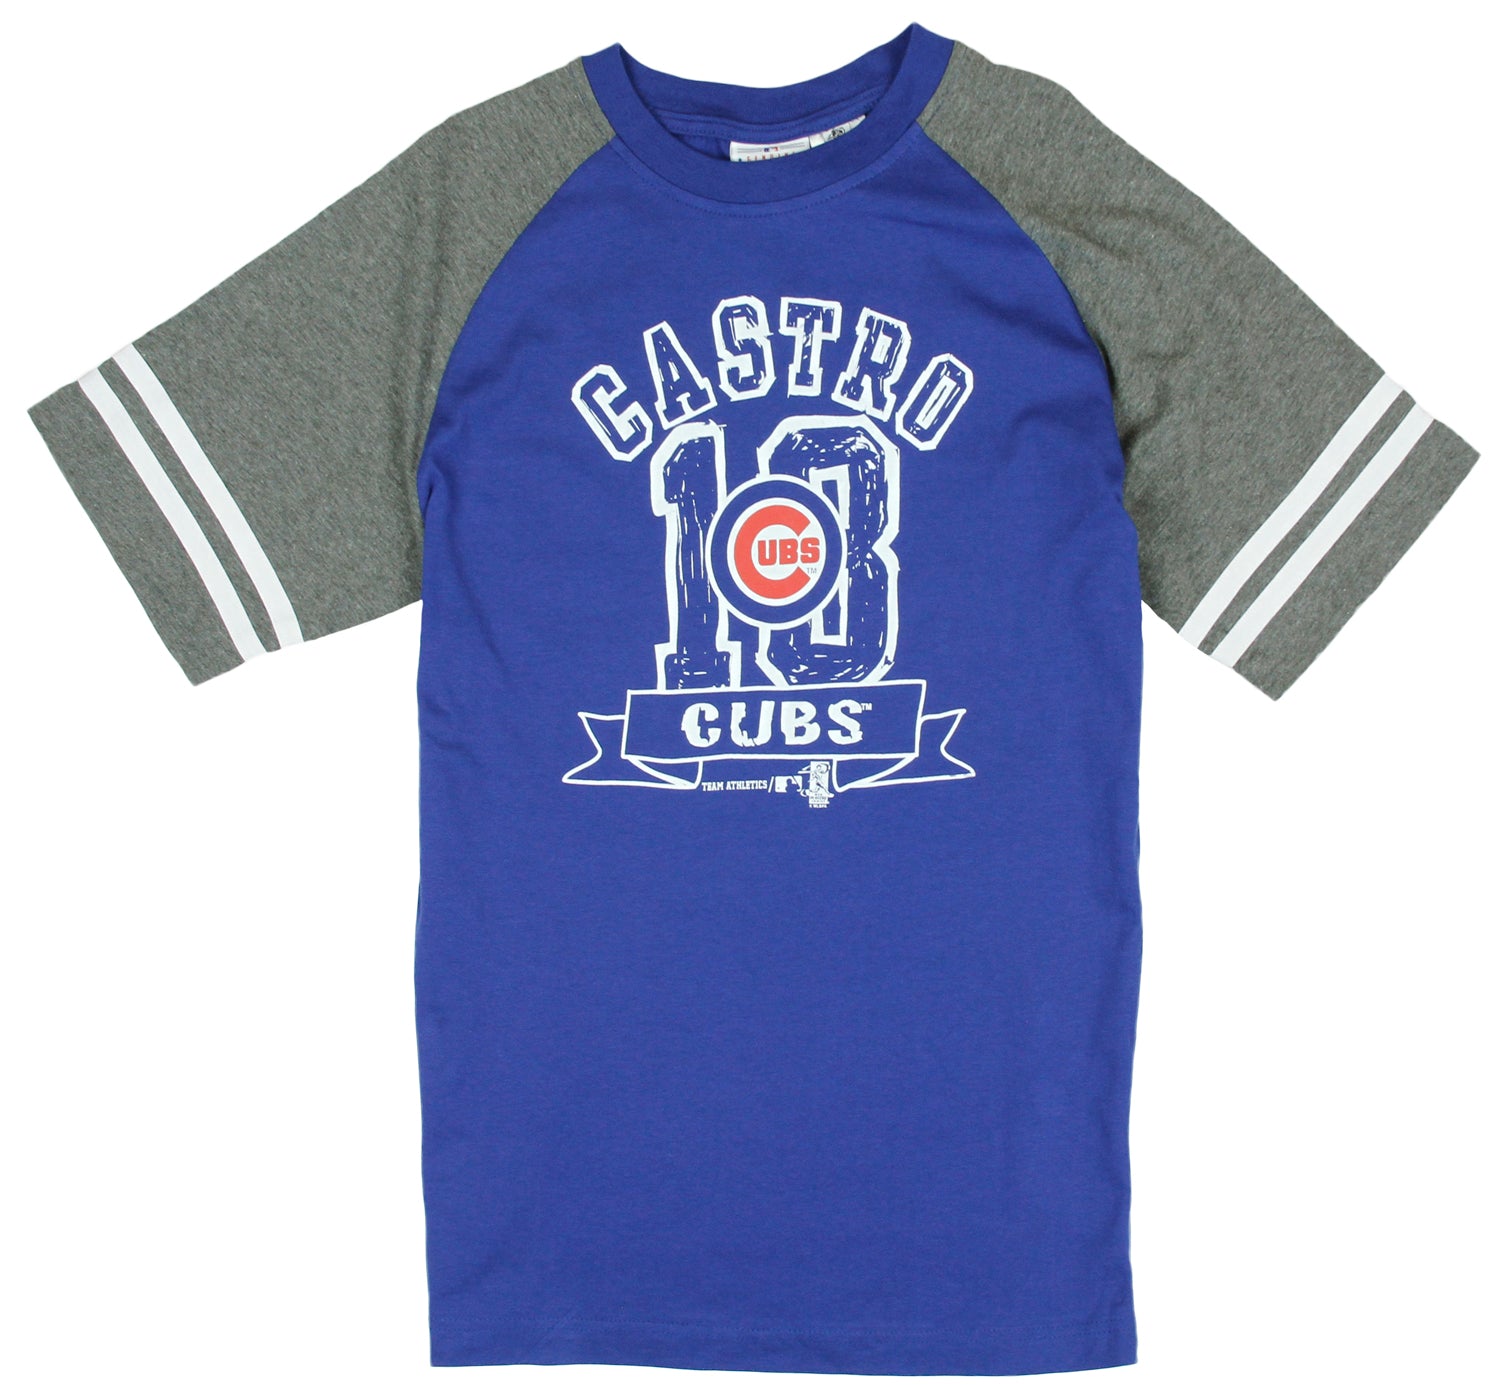 MLB Baseball Kids / Youth Chicago Cubs Starlin Castro # 13 Shirt